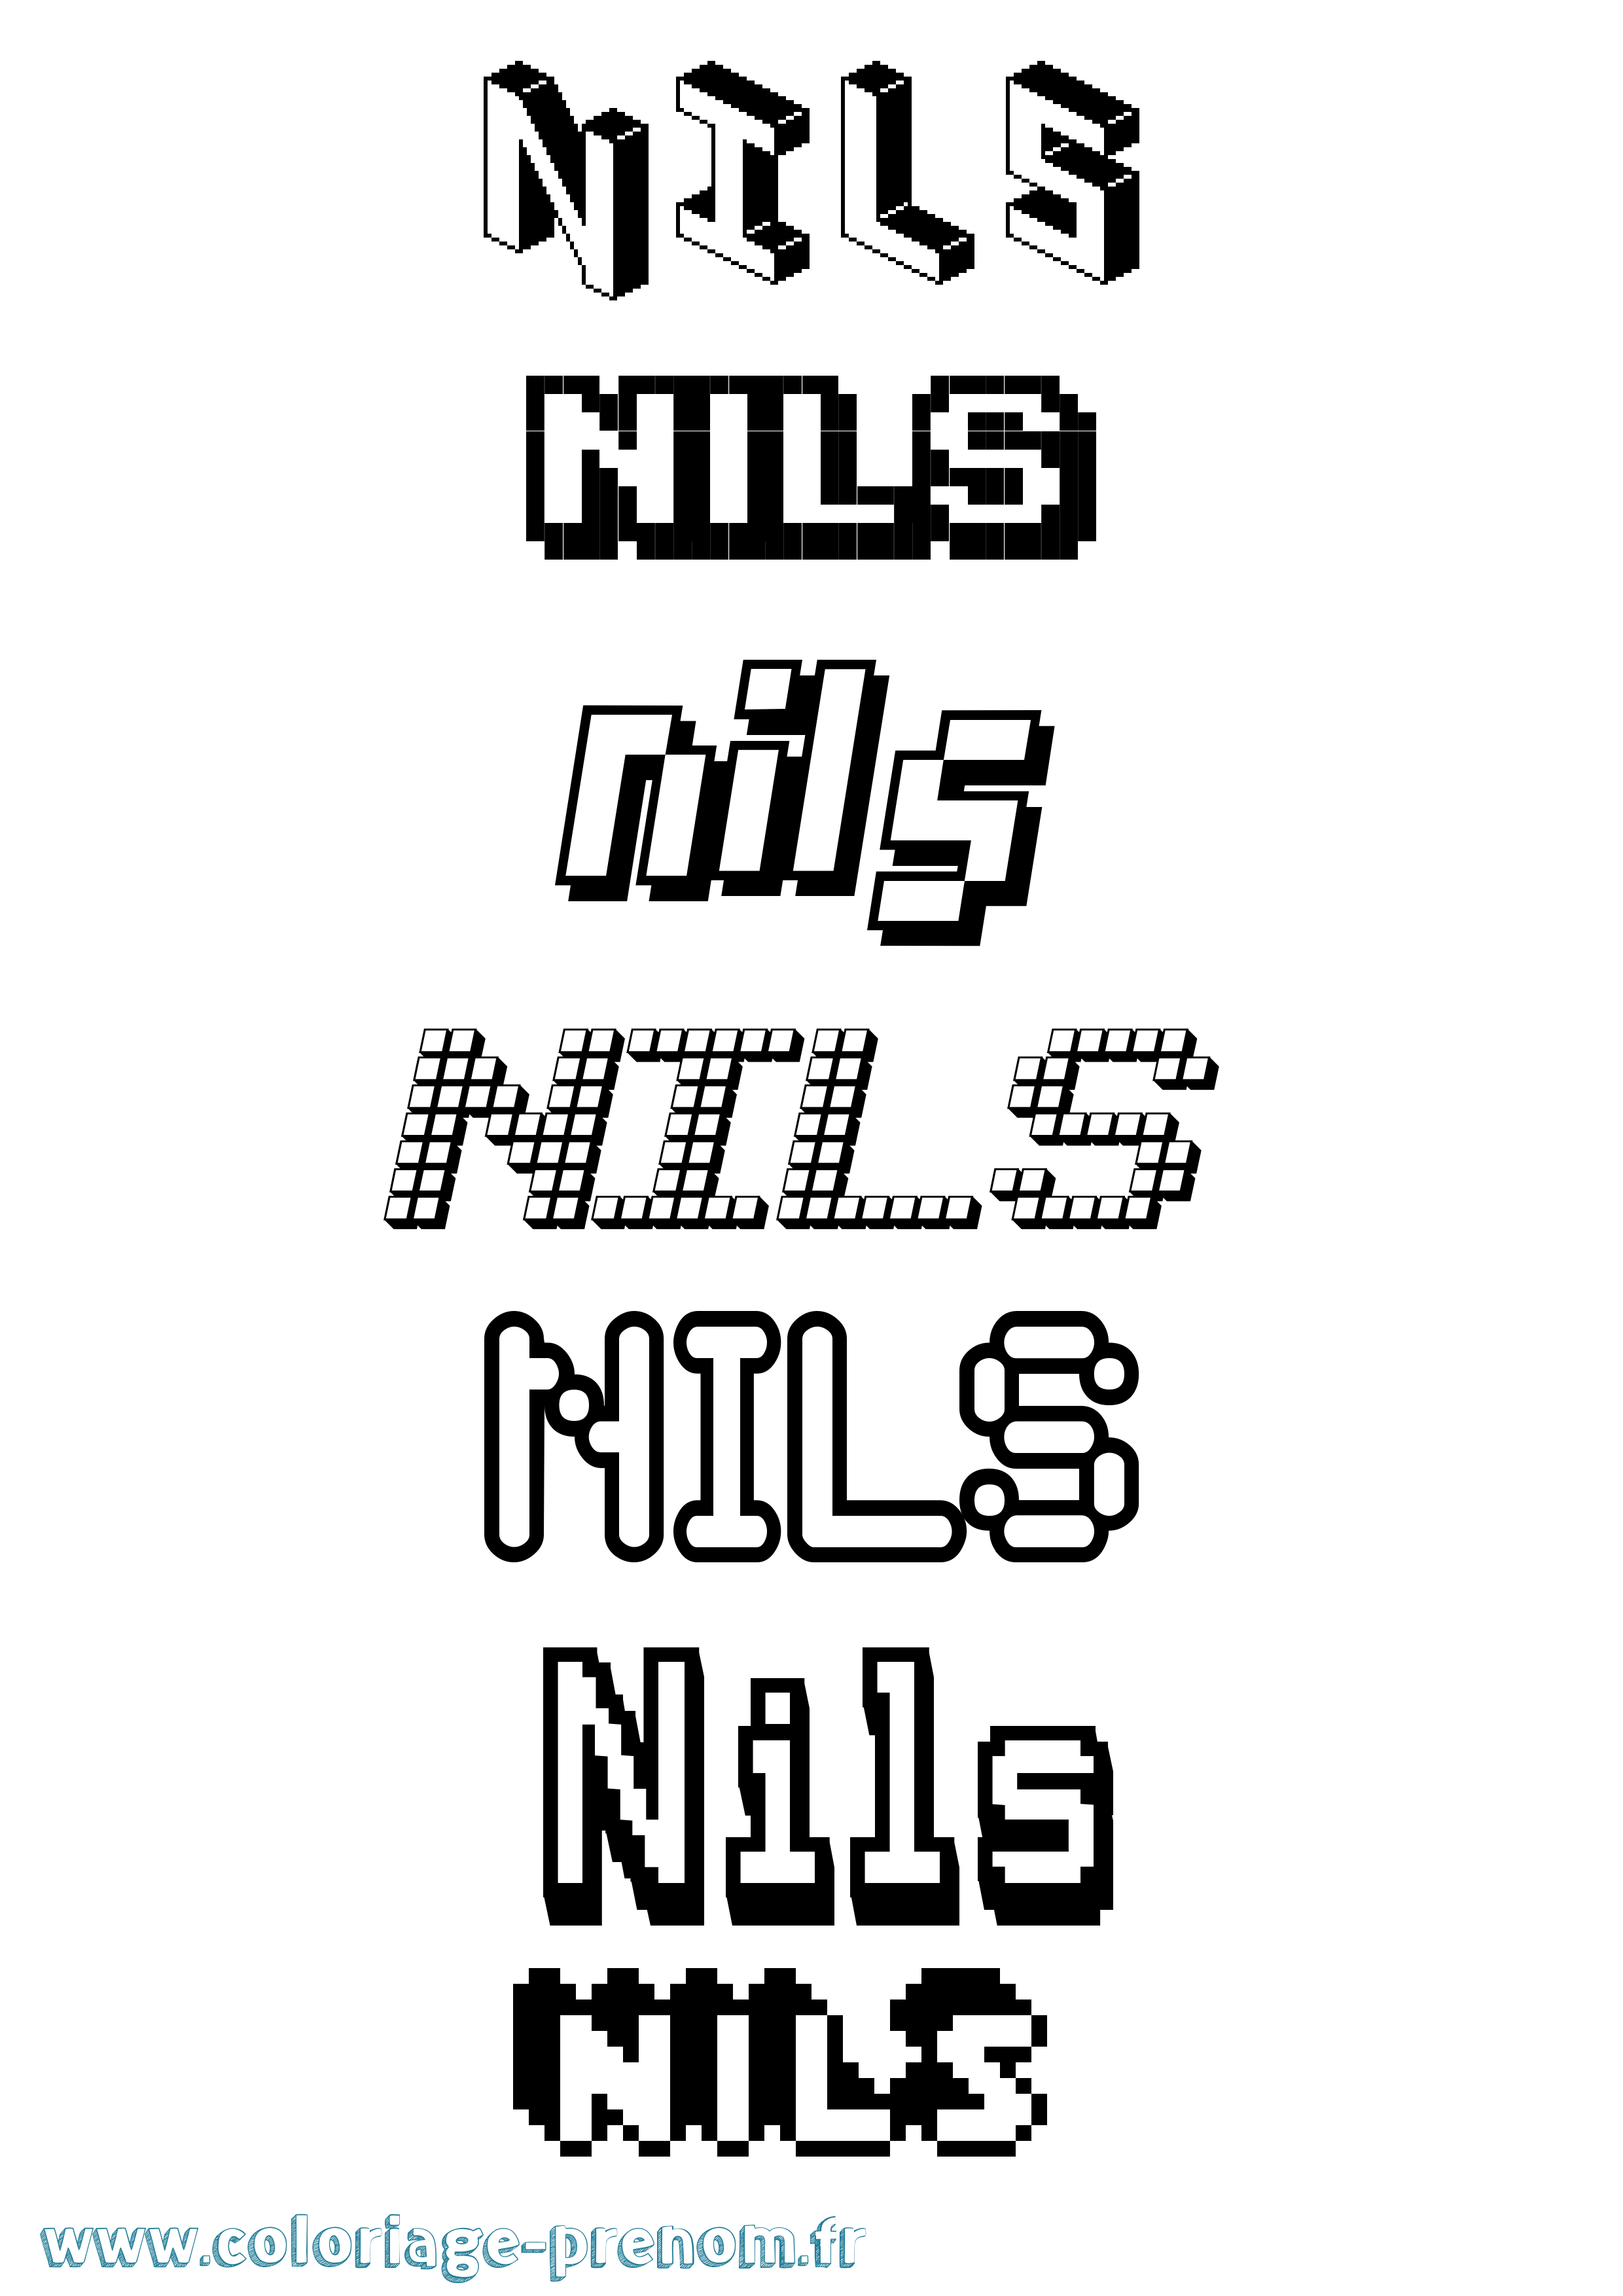 Coloriage prénom Nils Pixel